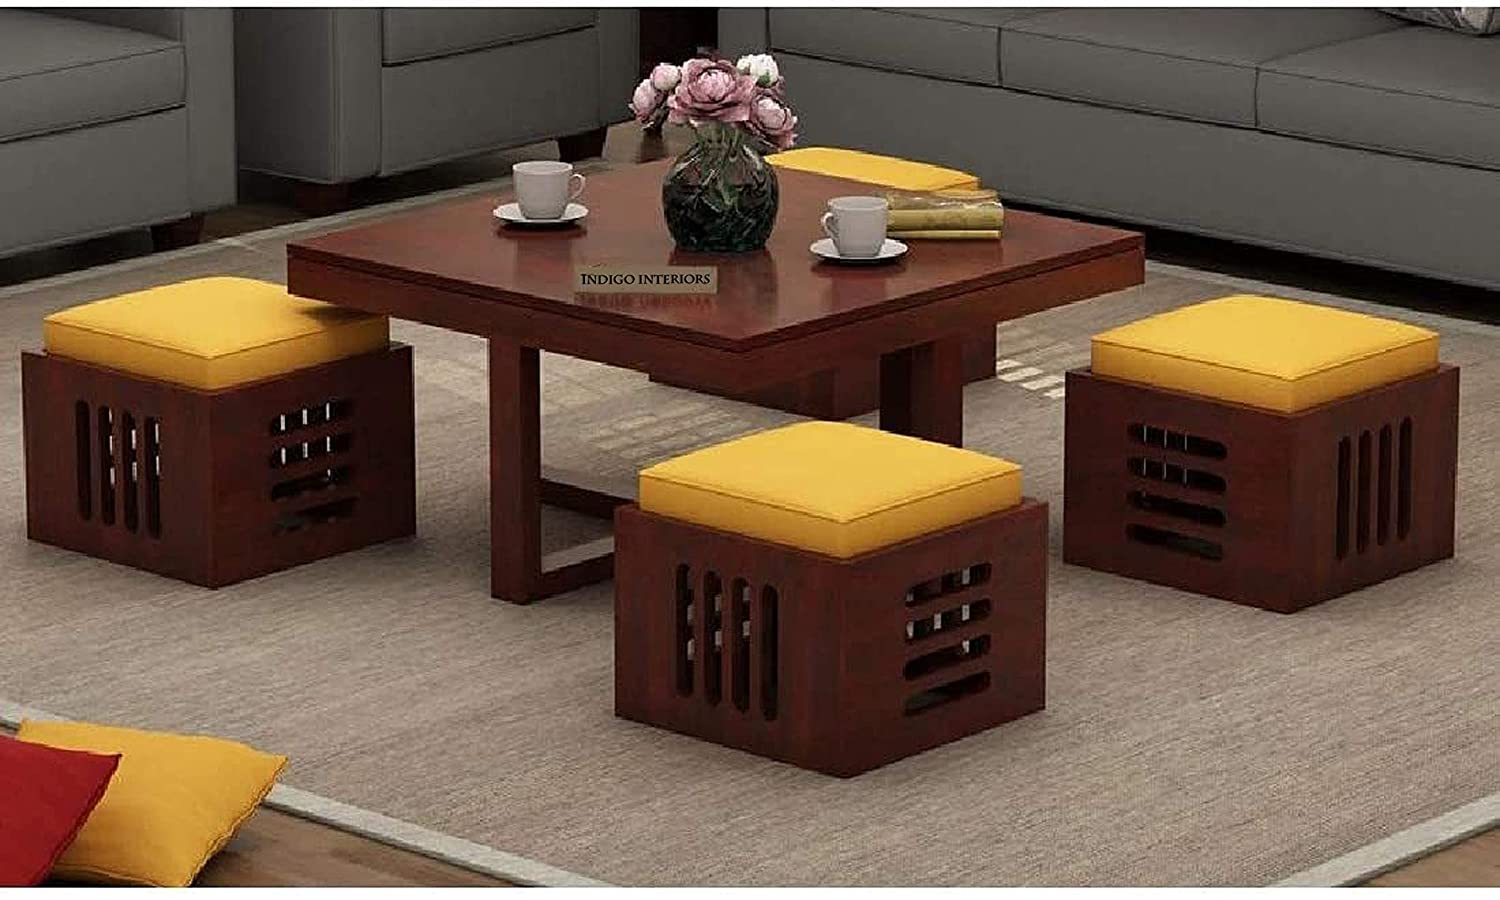 Indigo interiors Solid Sheesham Wood Coffee Table with 4 stools